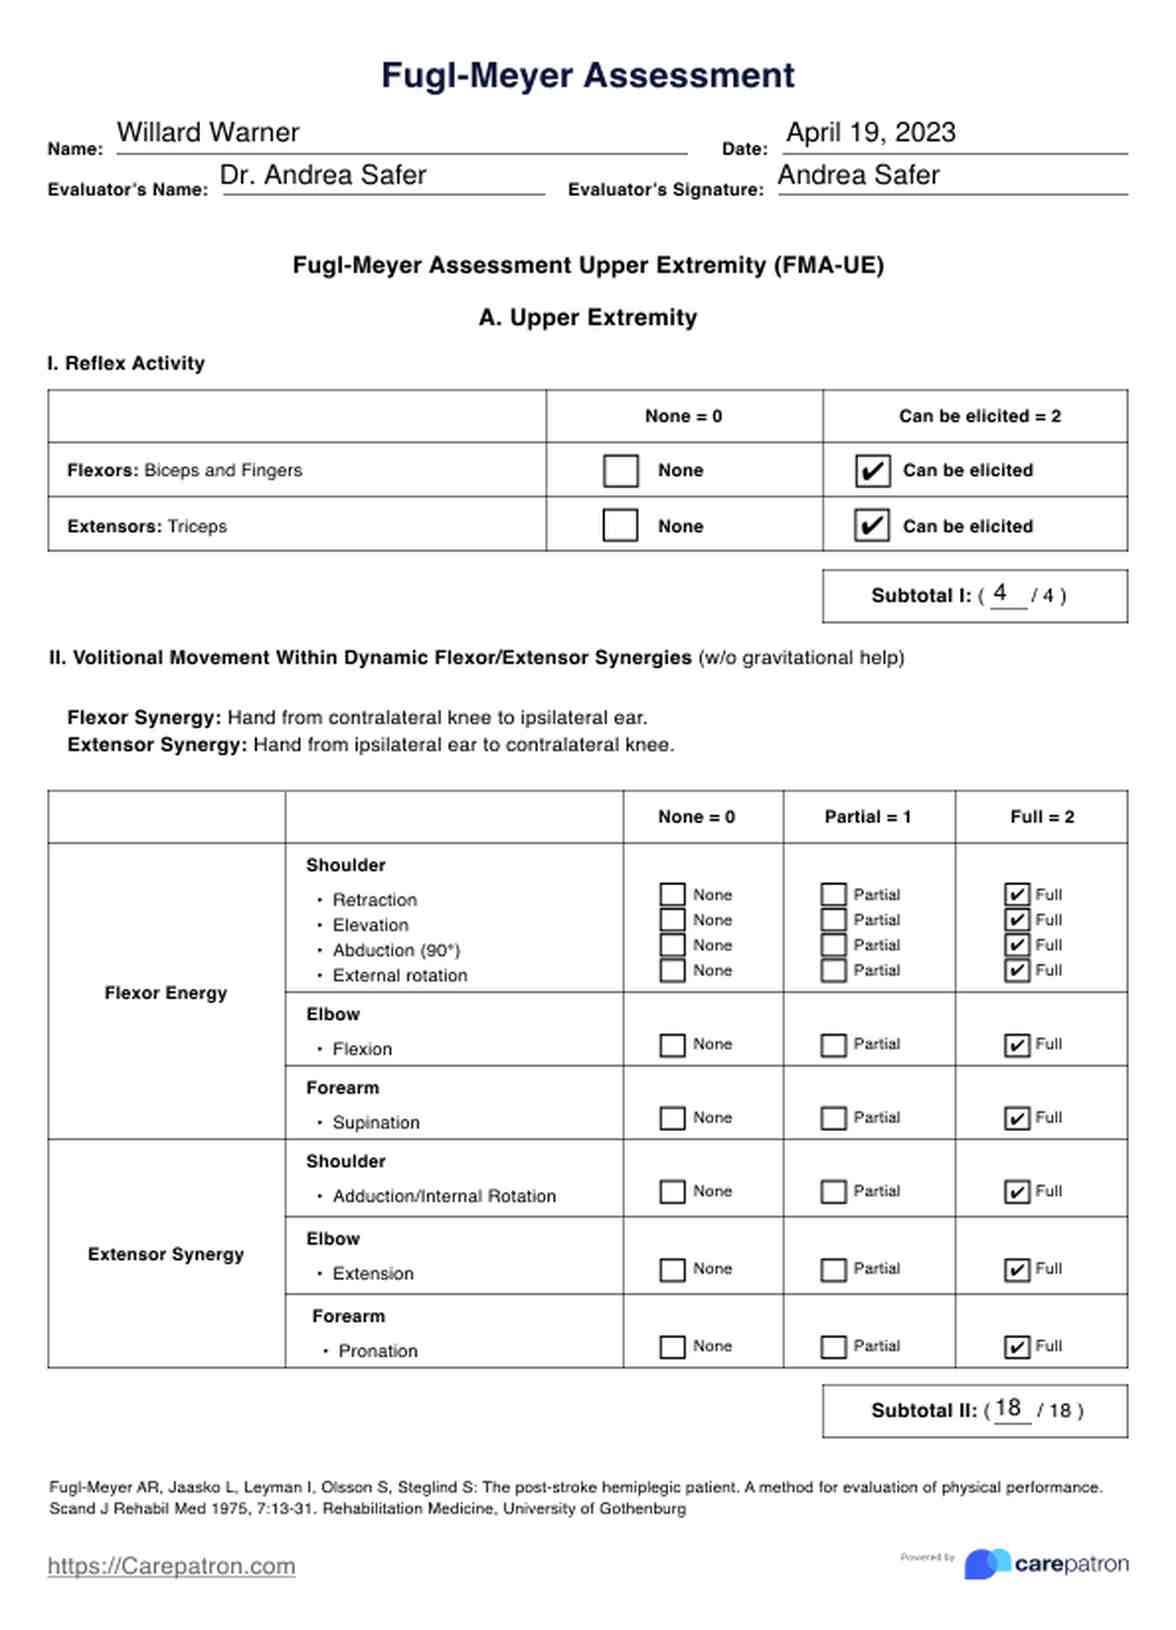 Fugl Meyer Assessment PDF Example